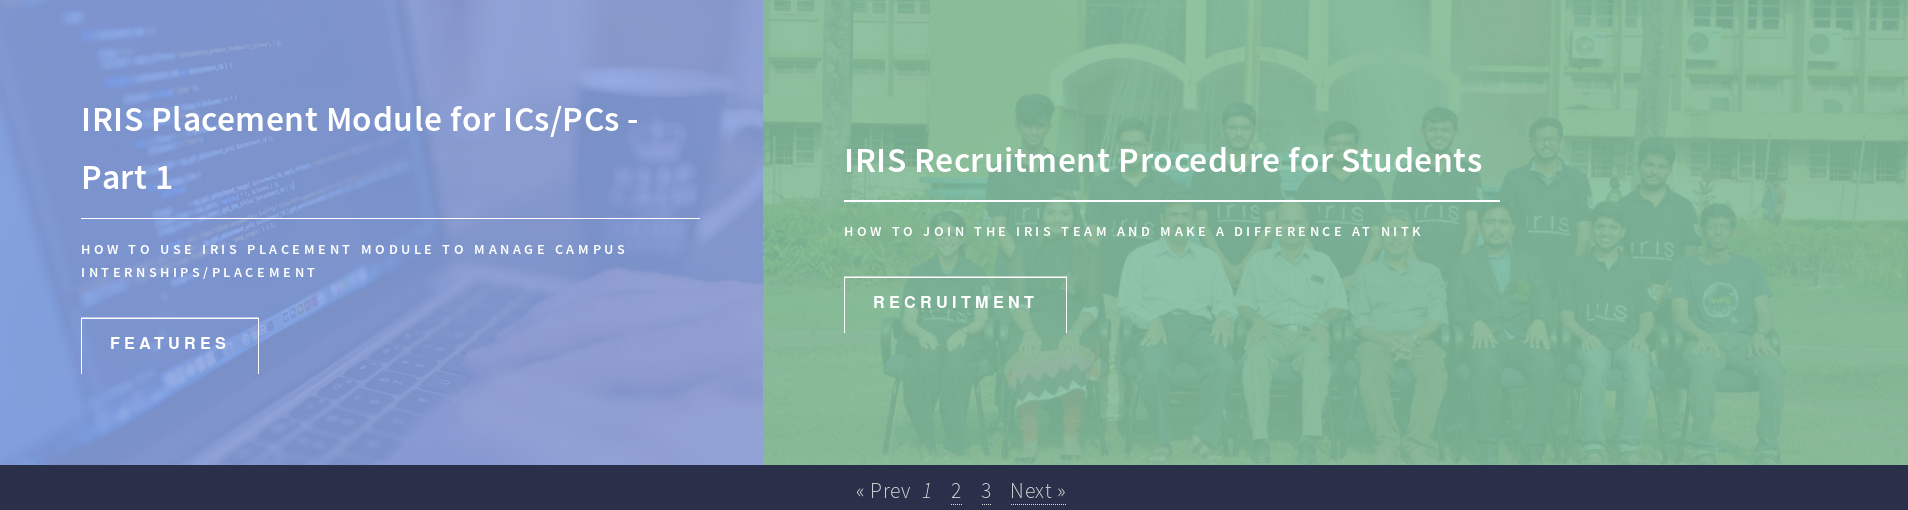 Home Page of IRIS Blog